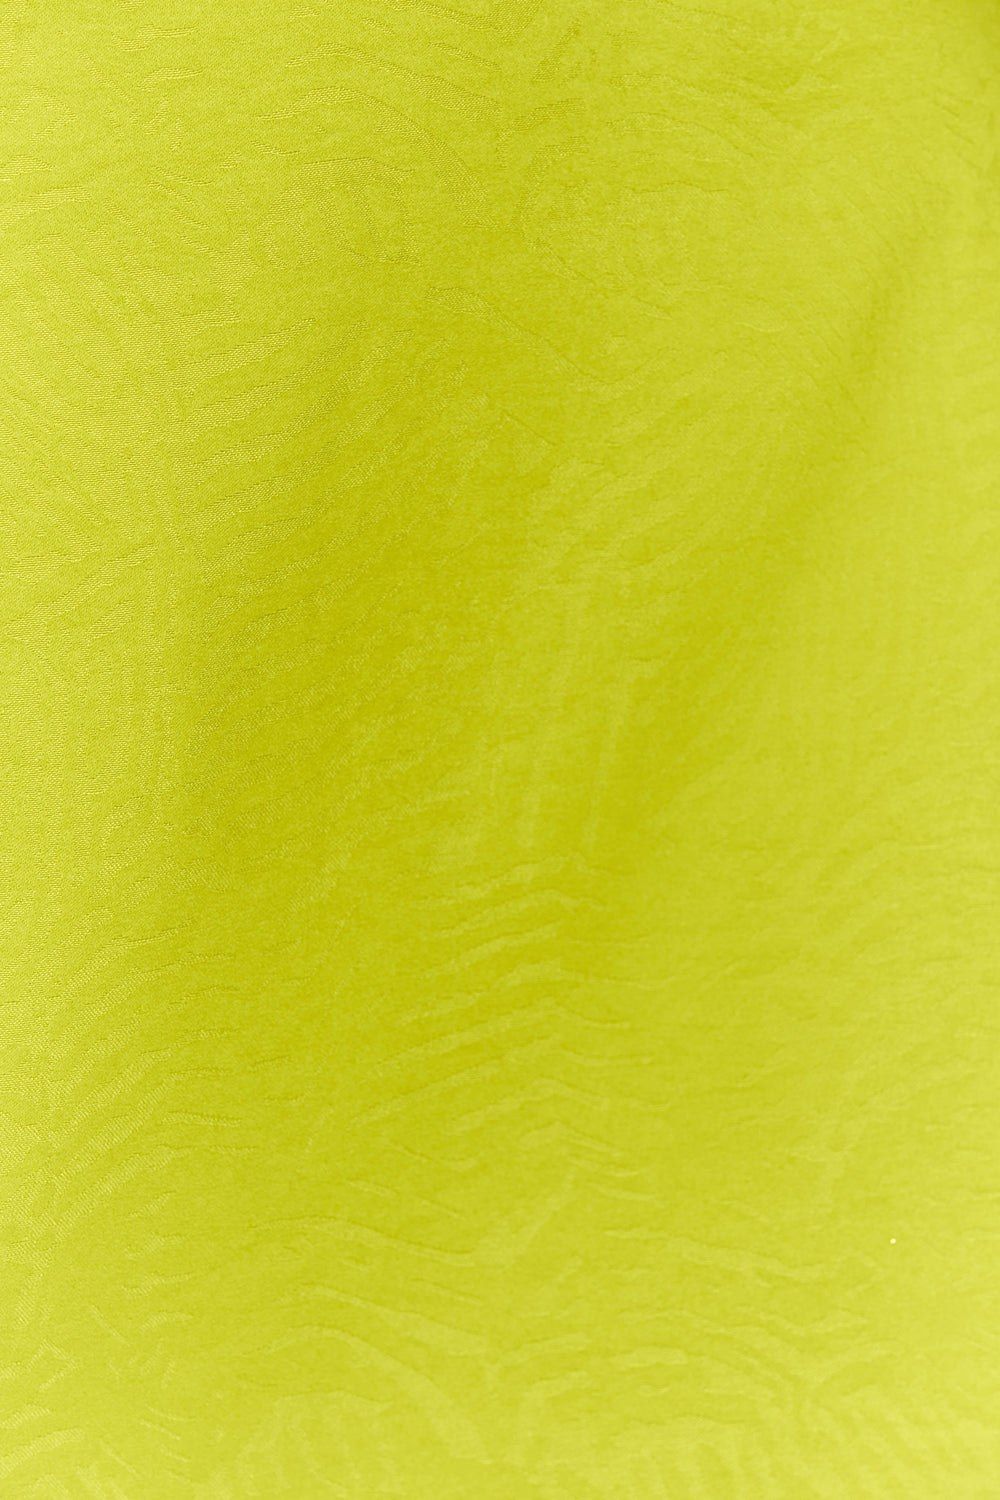 Annalise Satin A Line Mini Skirt - Chartreuse